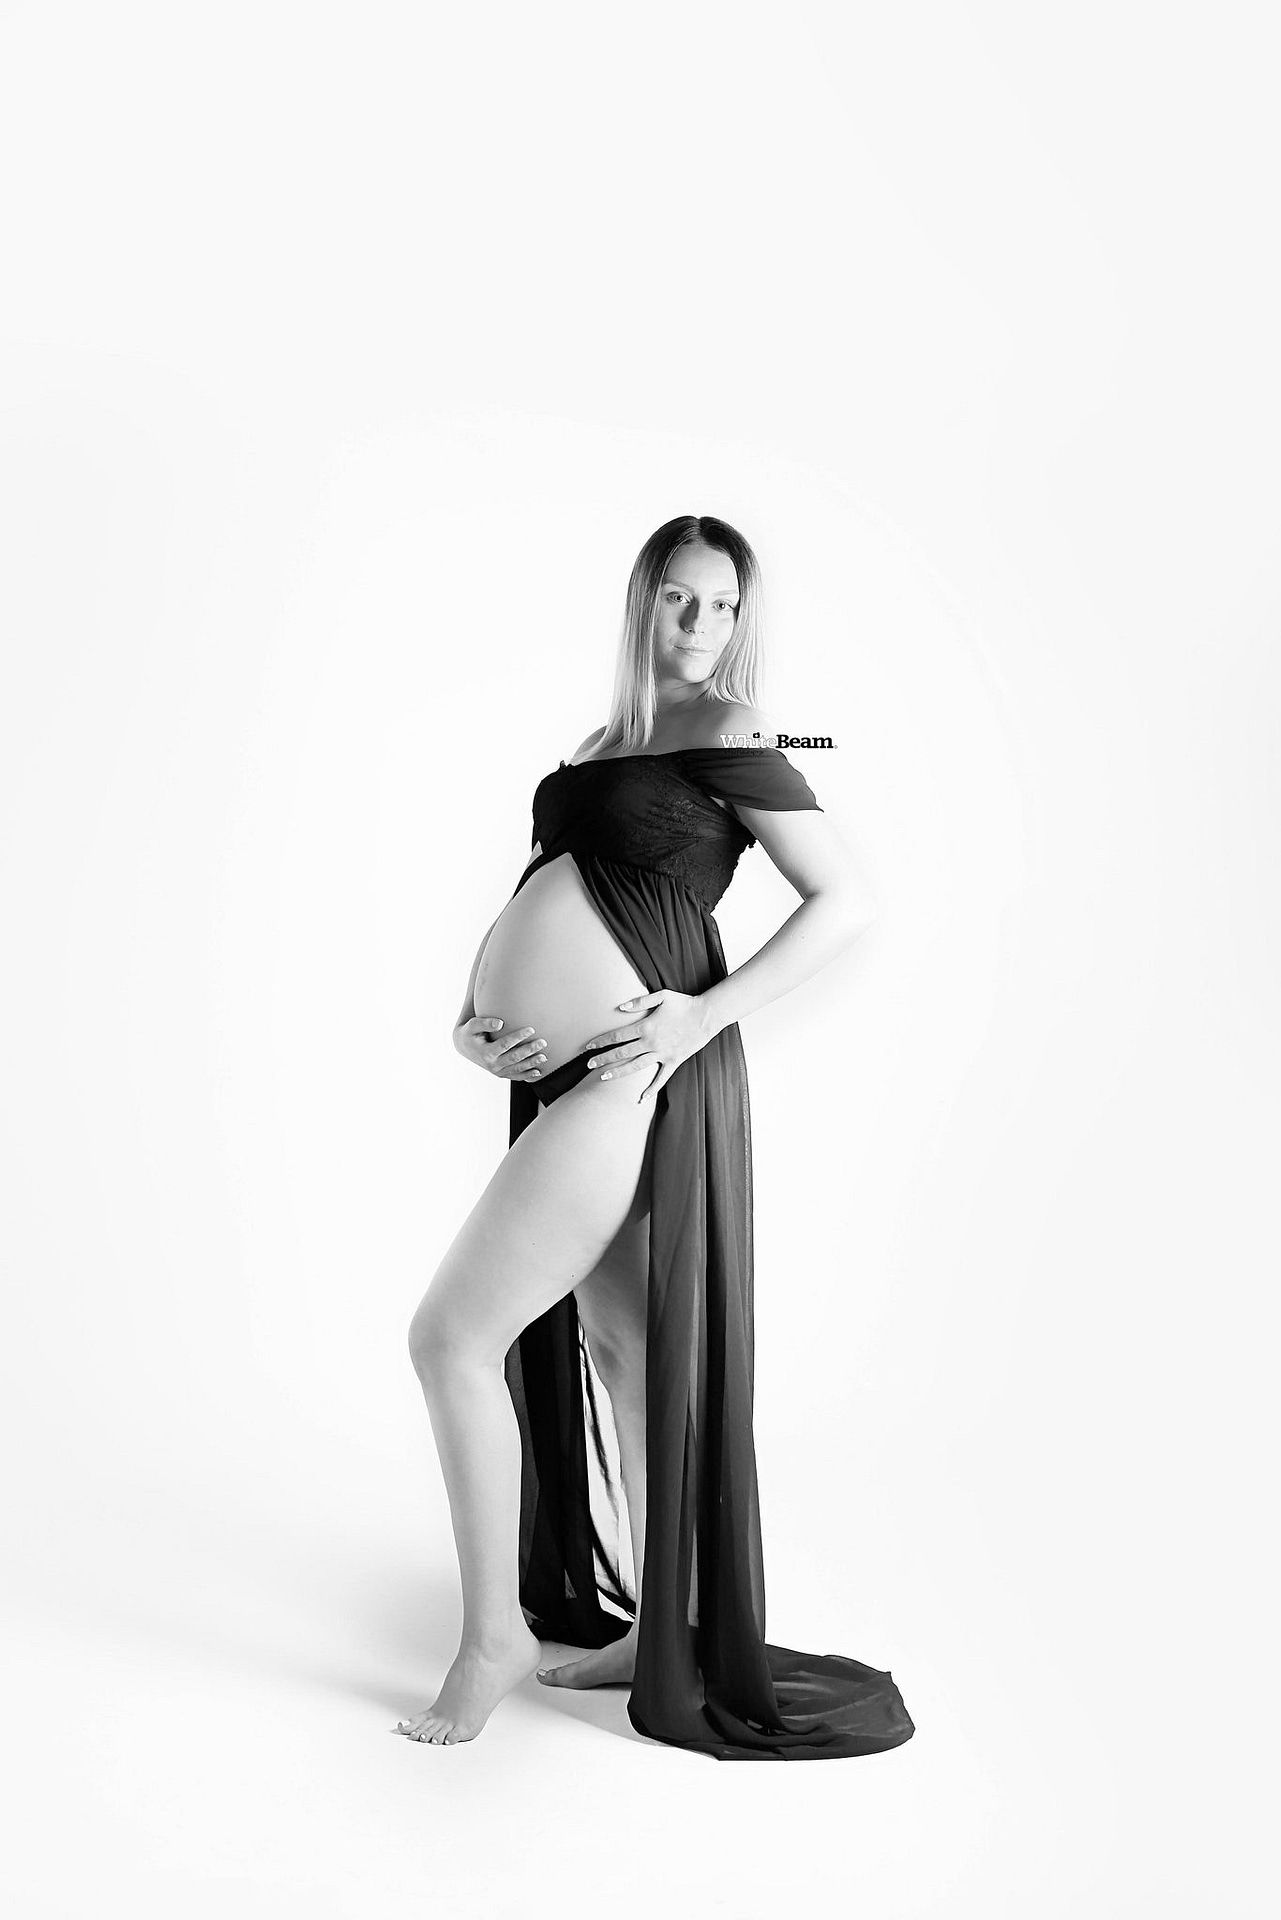 Maternity Photoshoot